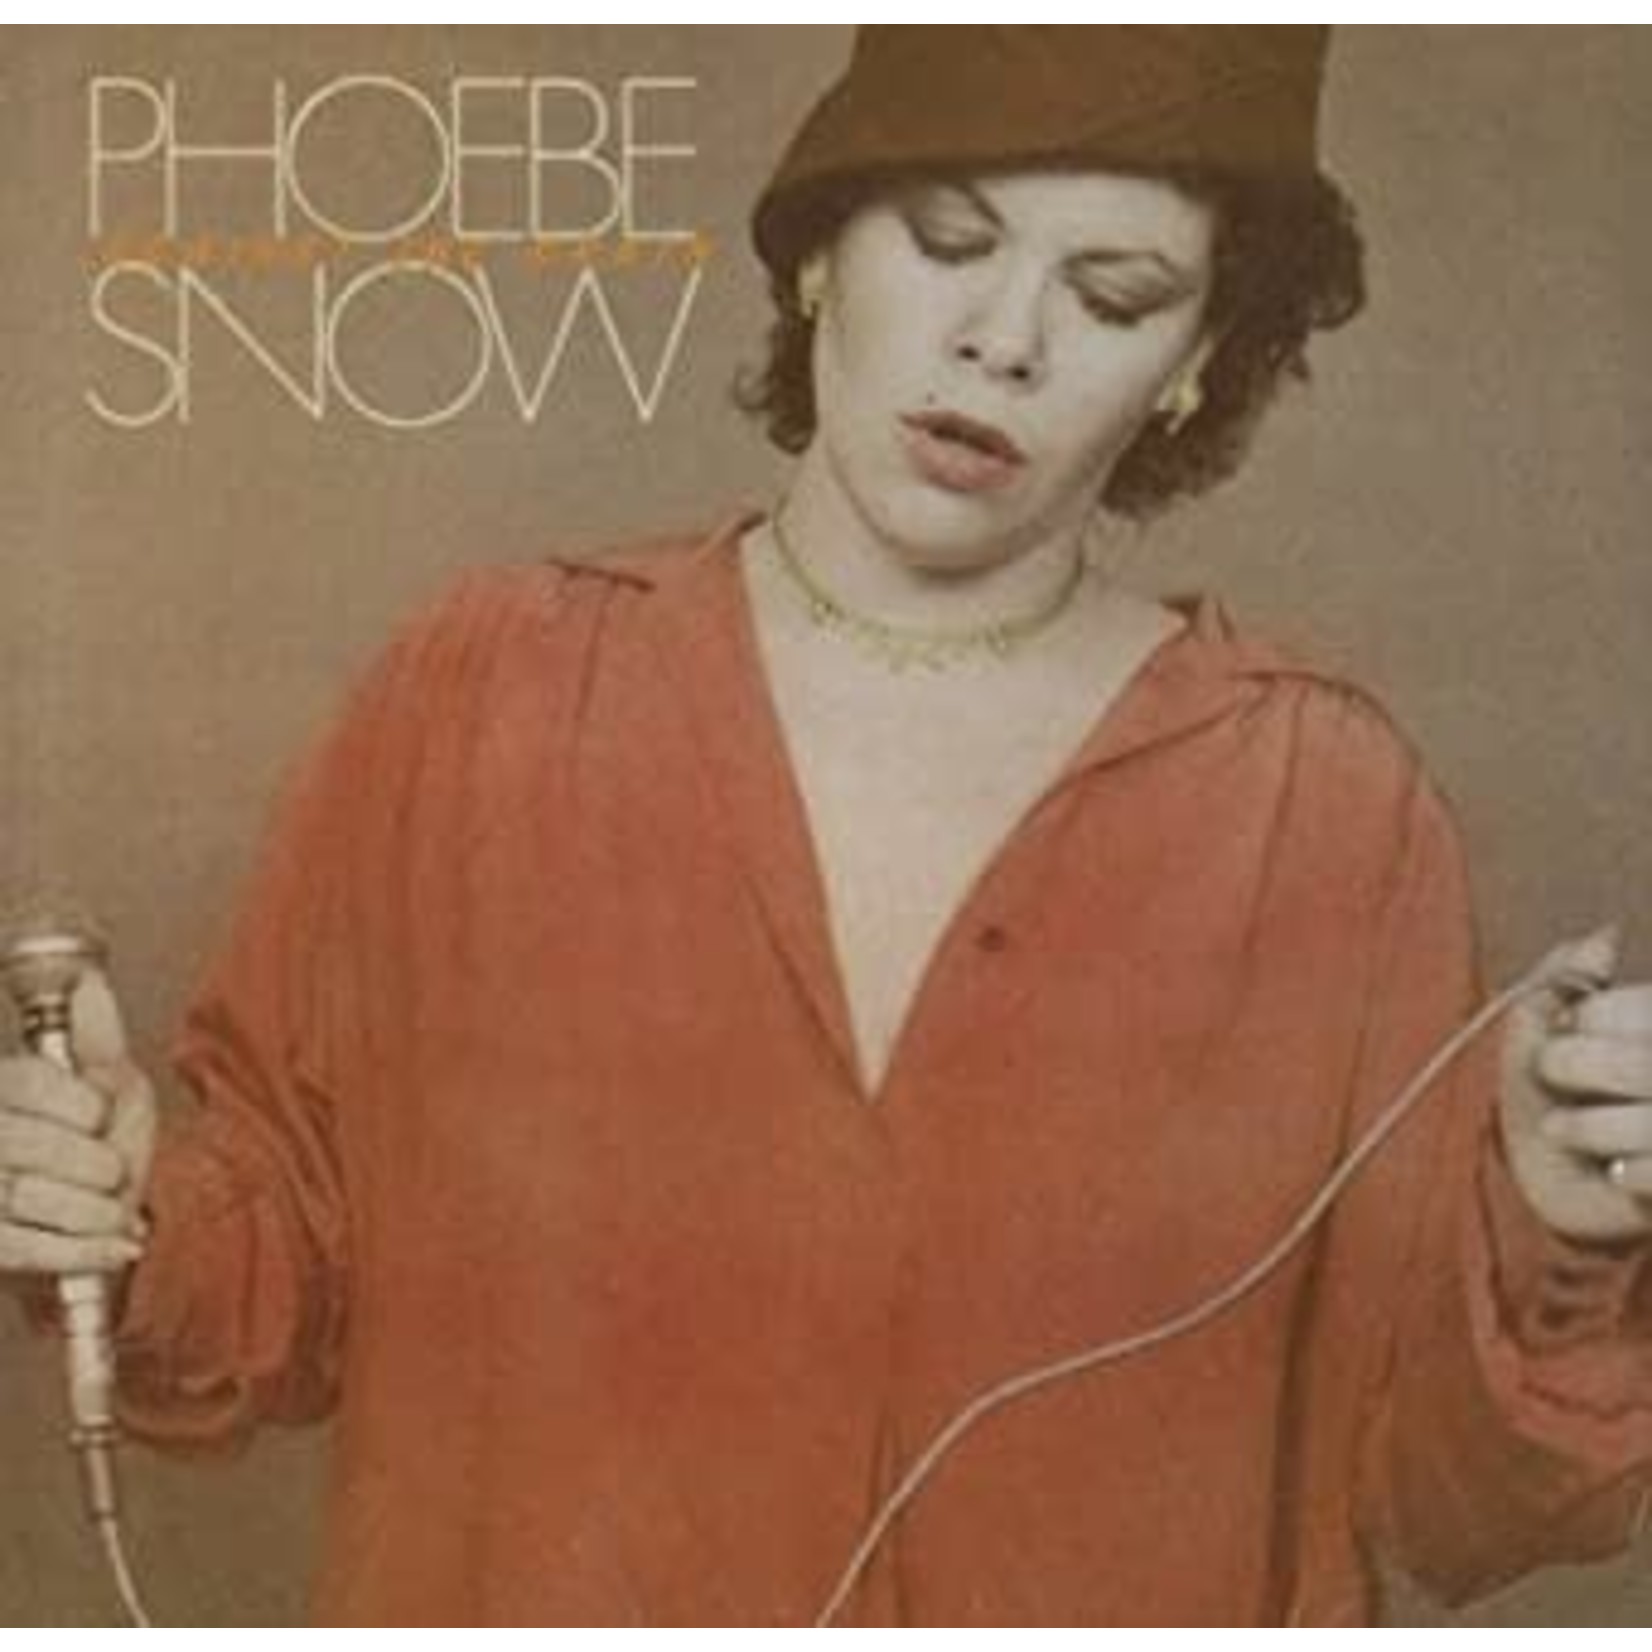 [Vintage] Phoebe Snow - Against the Grain